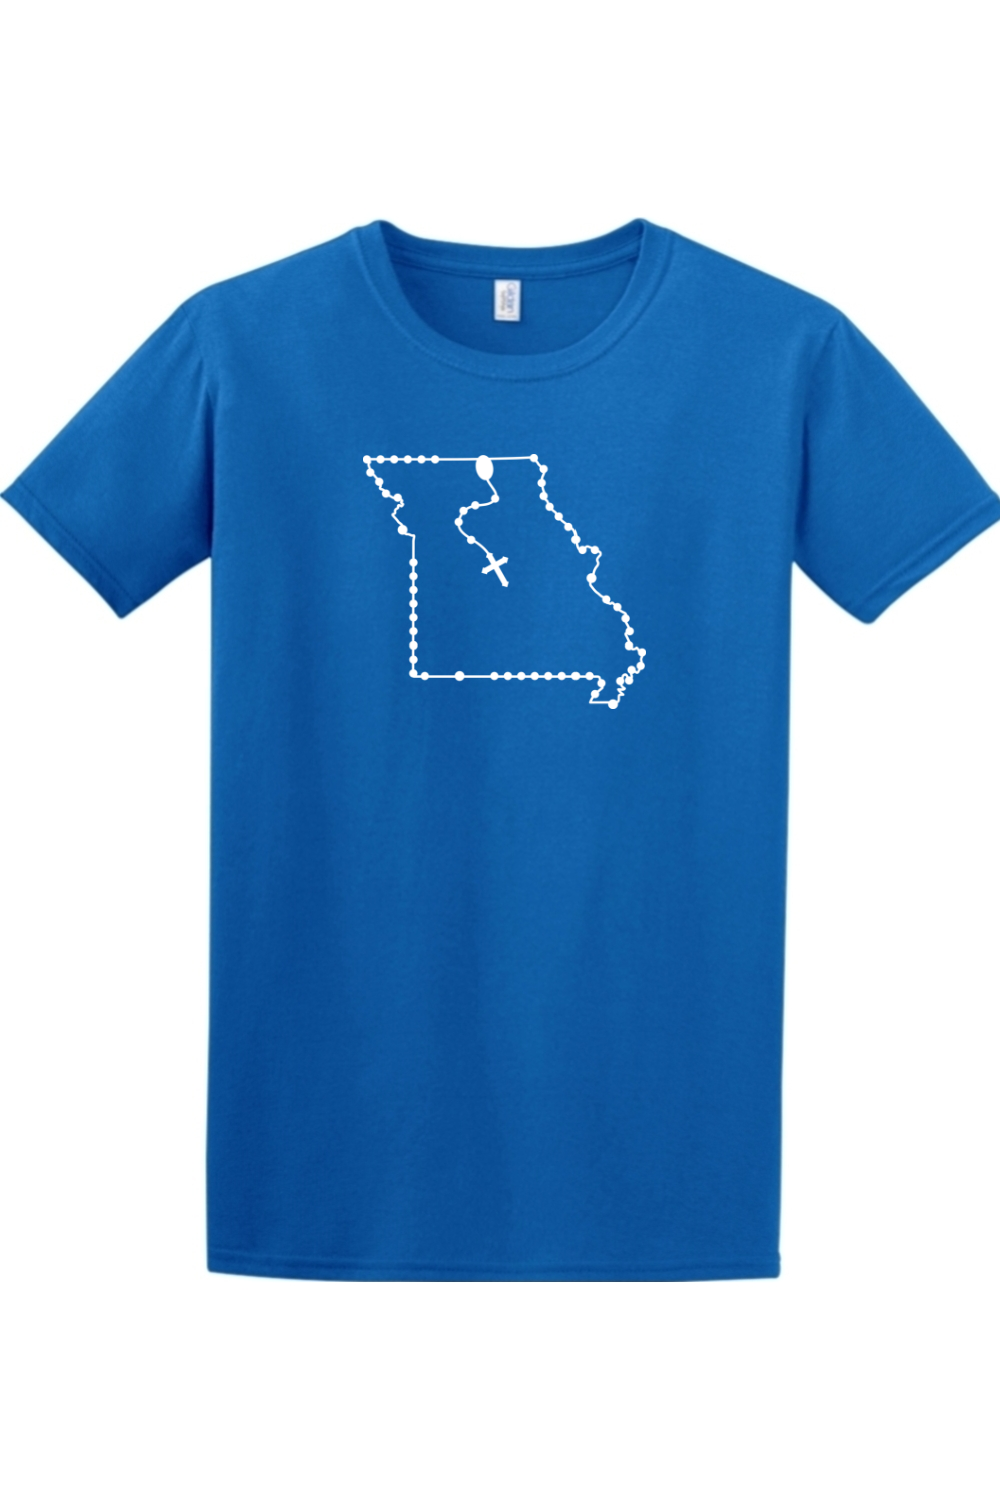 Missouri Rosary Adult T-shirt